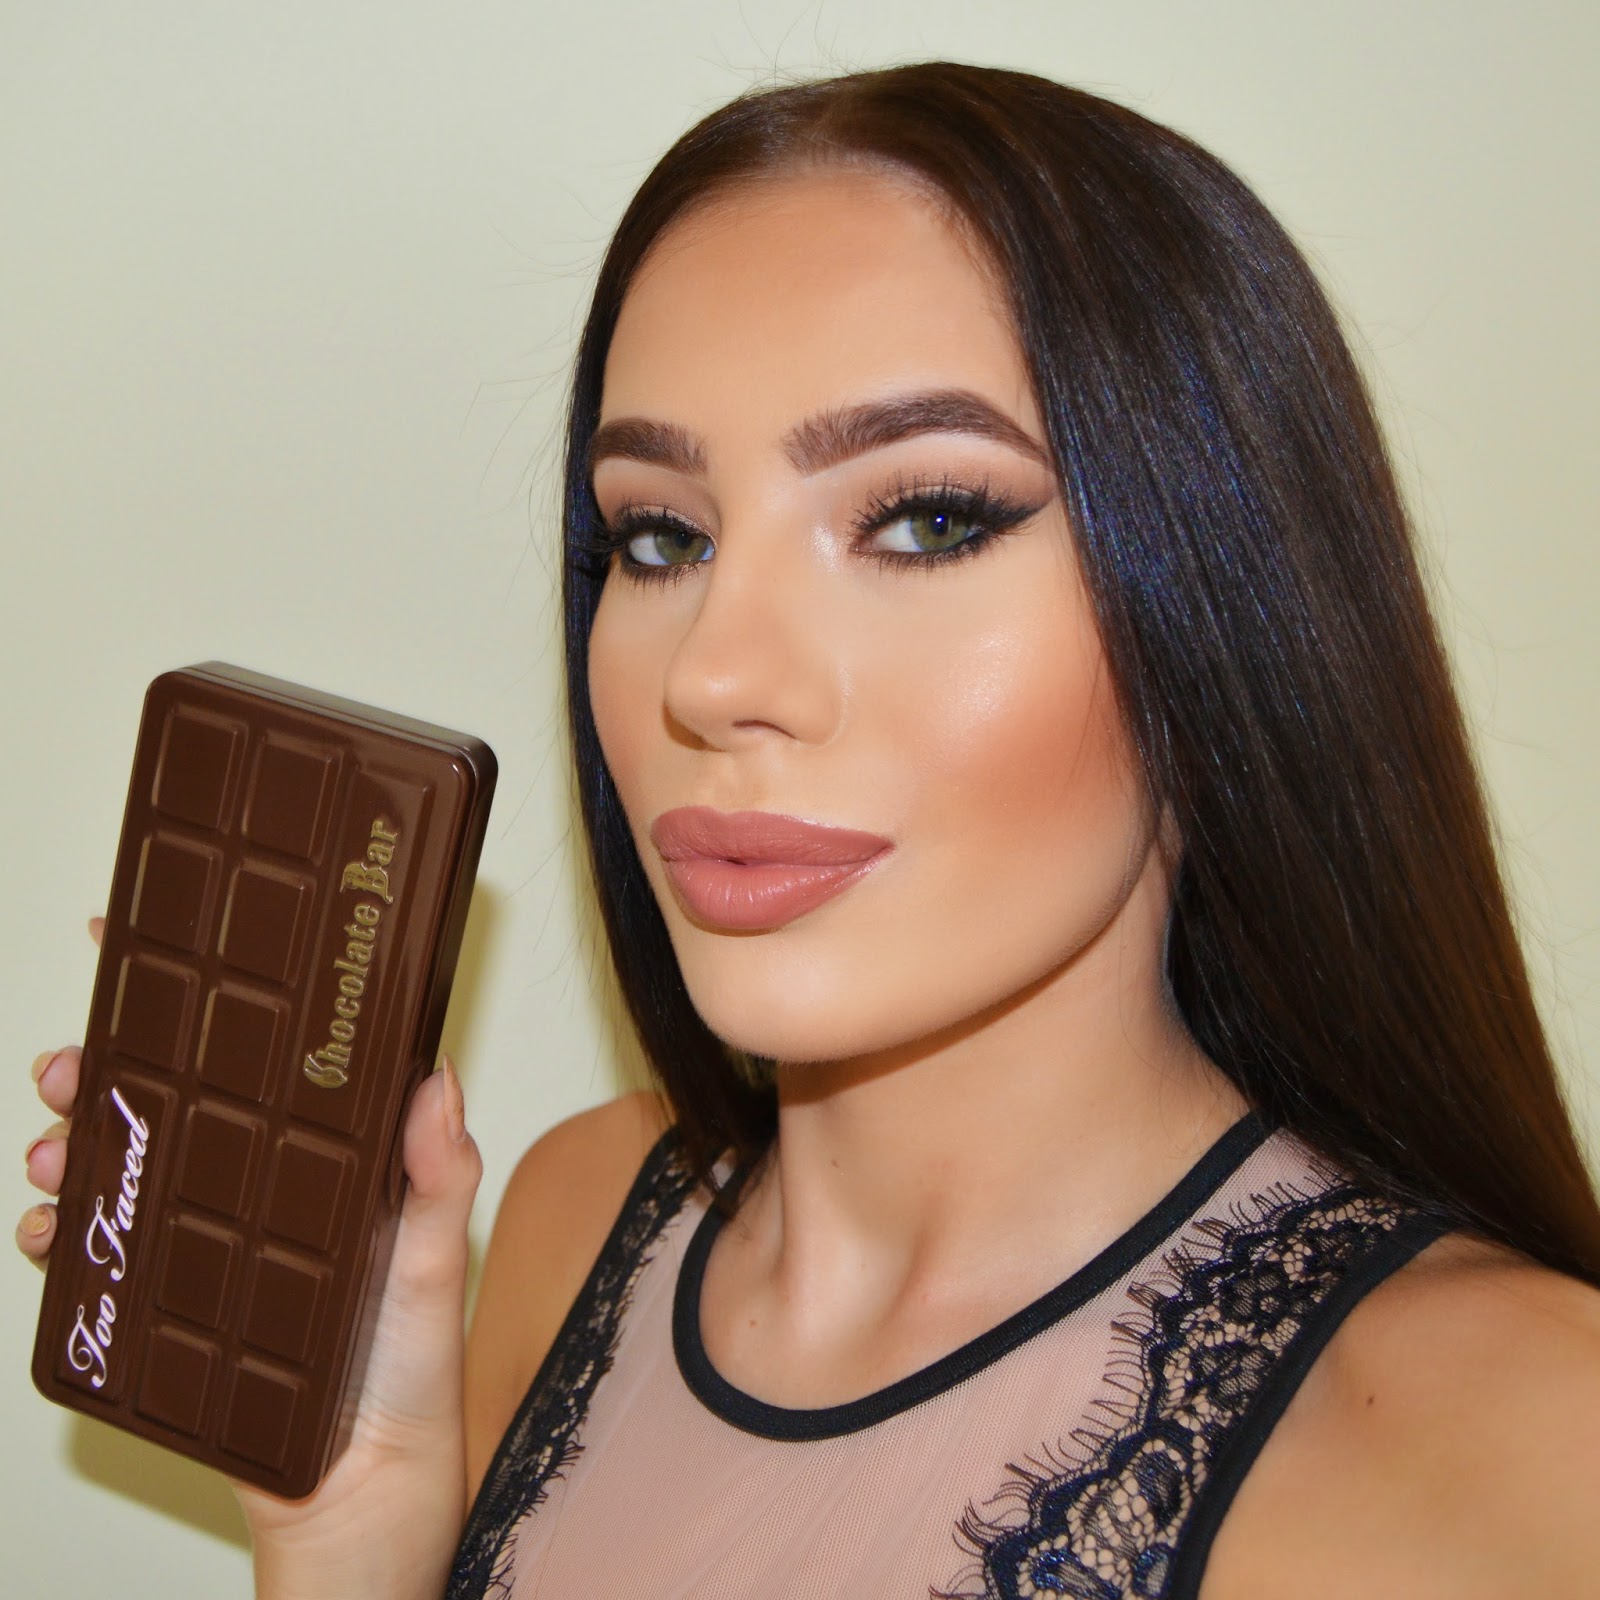 ugentlig skrig Med vilje Too Faced Chocolate Bar Pallete - Makeup Look/Review | LAURA BADURA